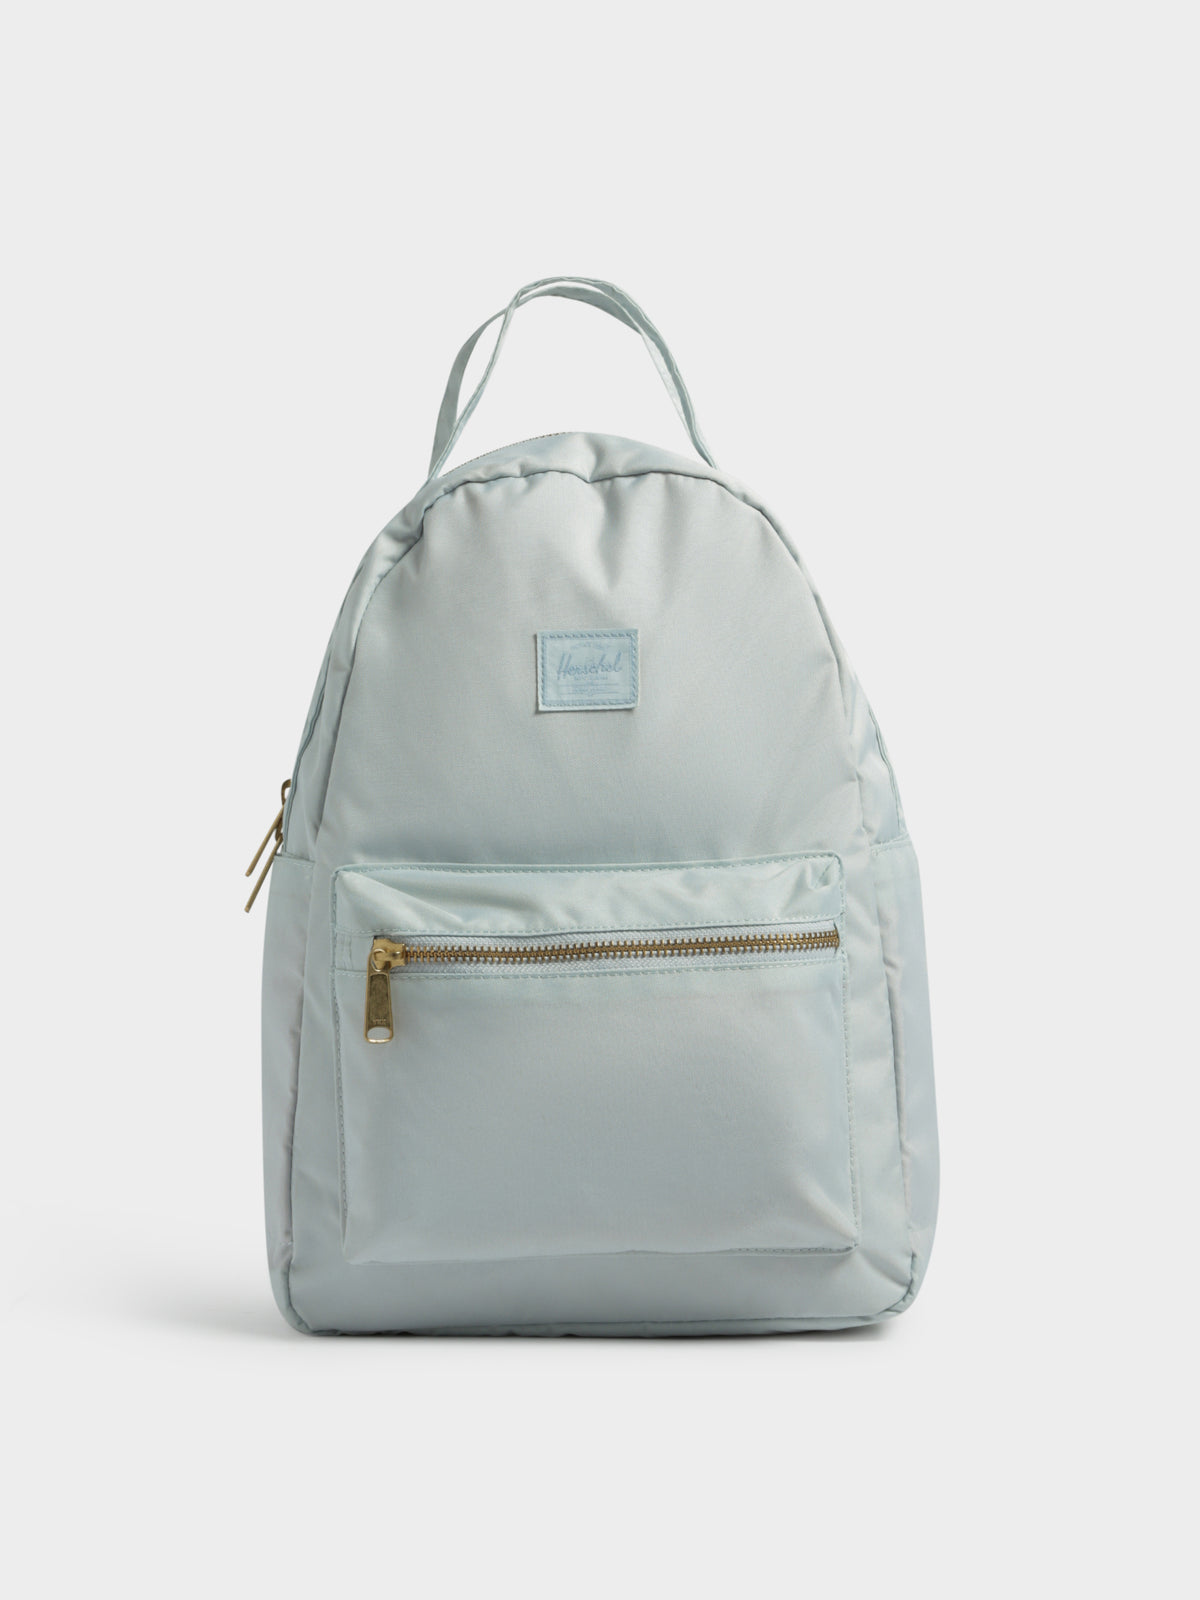 Nova Small Backpack in Ballad Blue Pastel